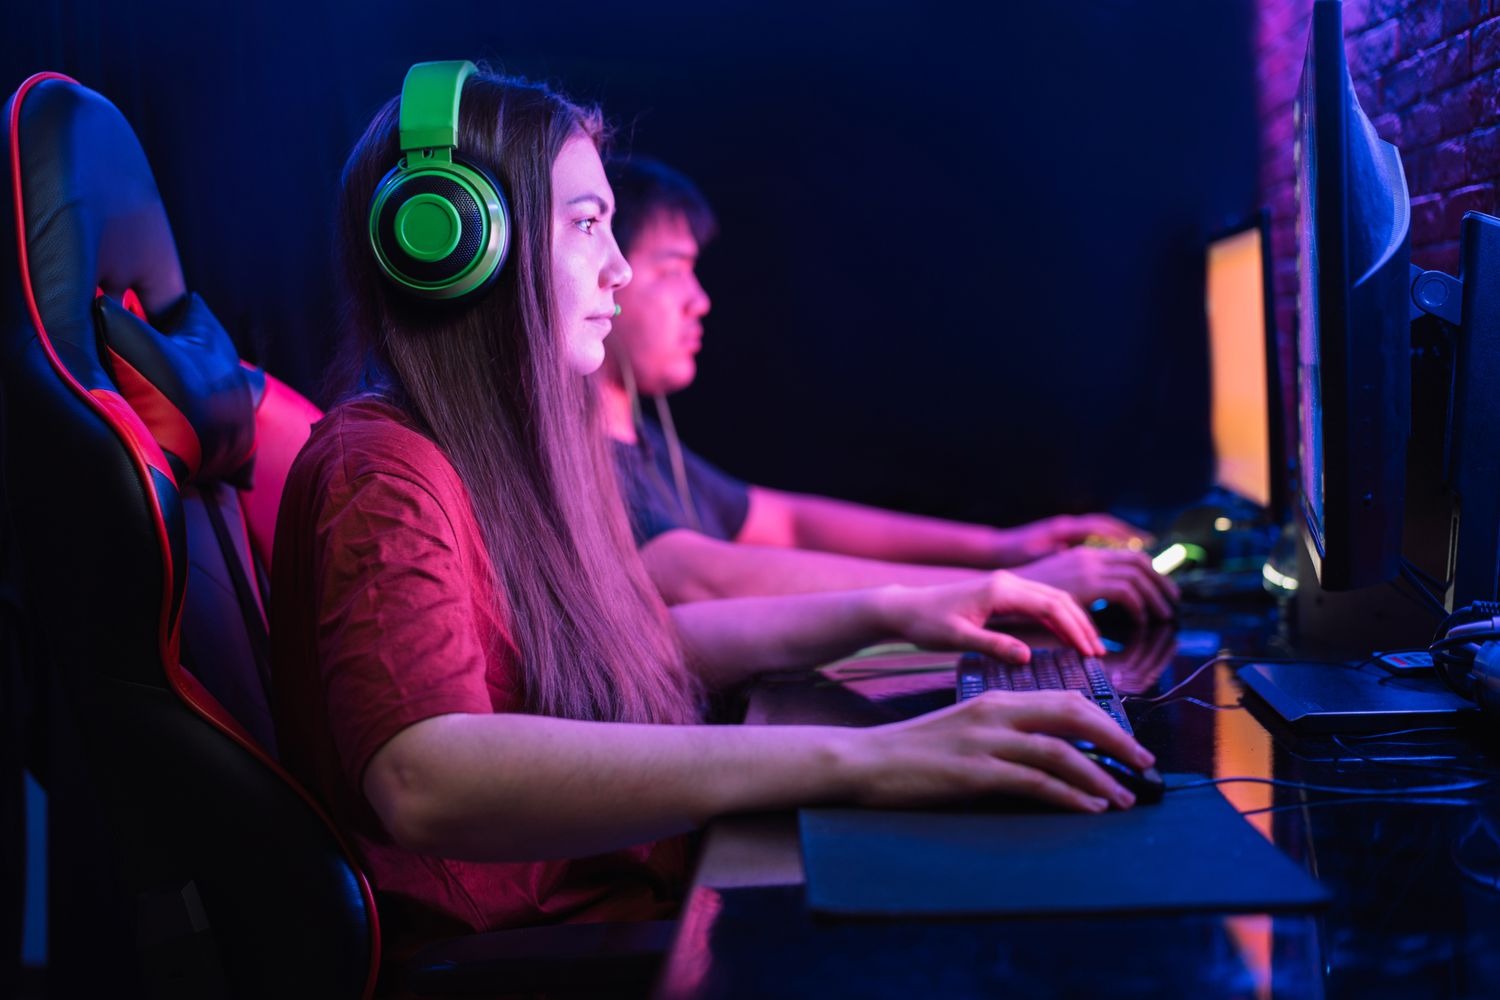 A female gamer, shown gaming.